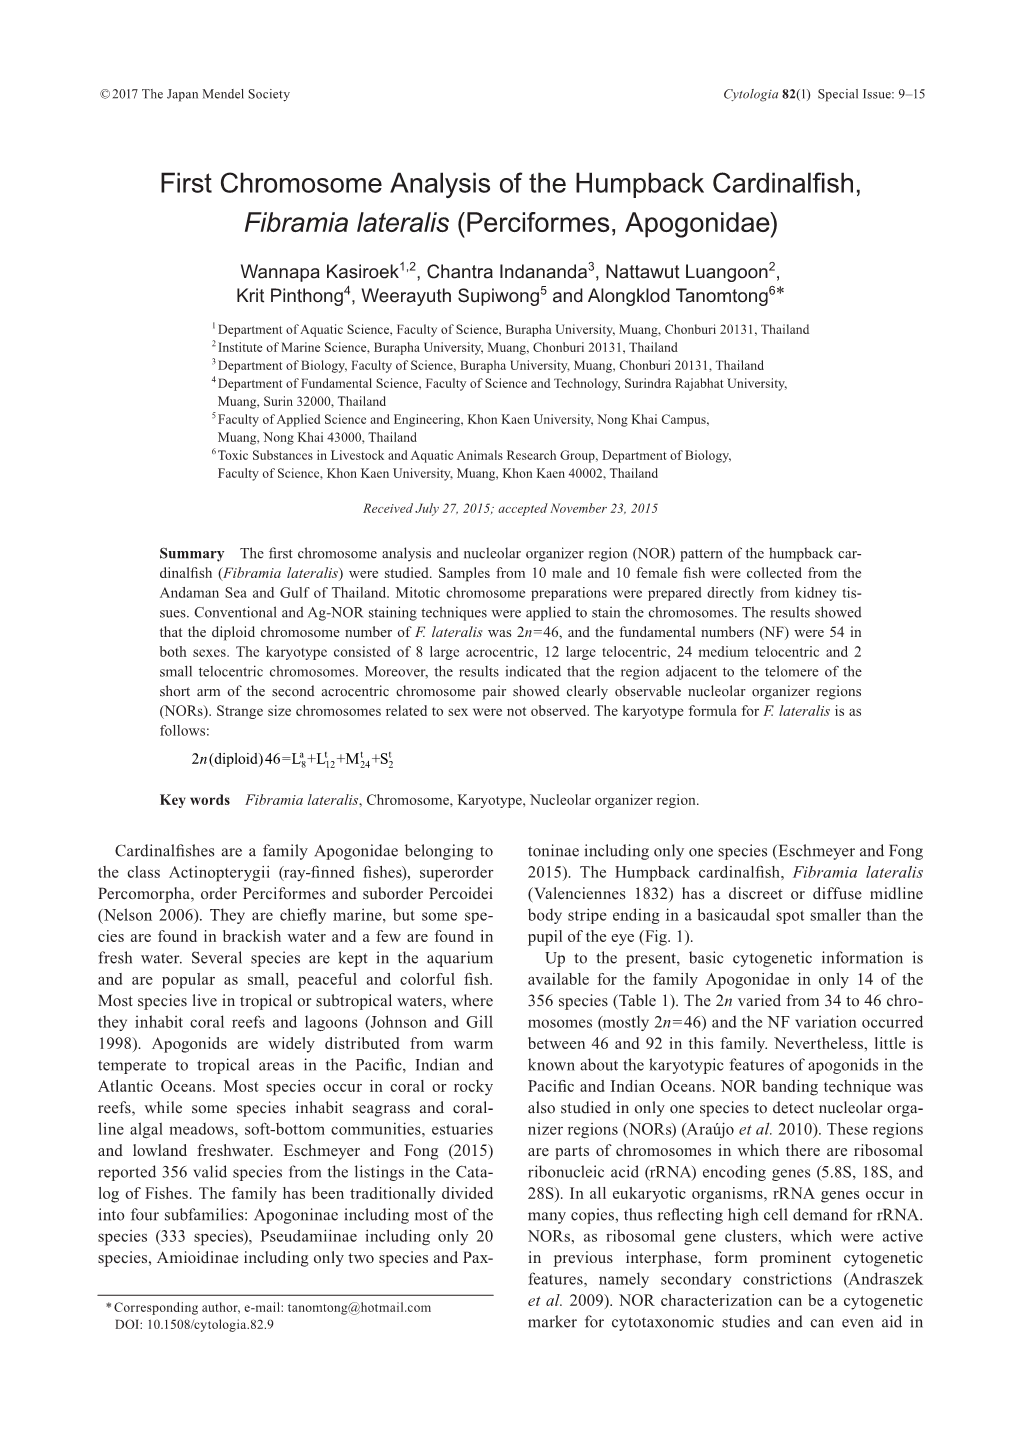 First Chromosome Analysis of the Humpback Cardinalfish, Fibramia